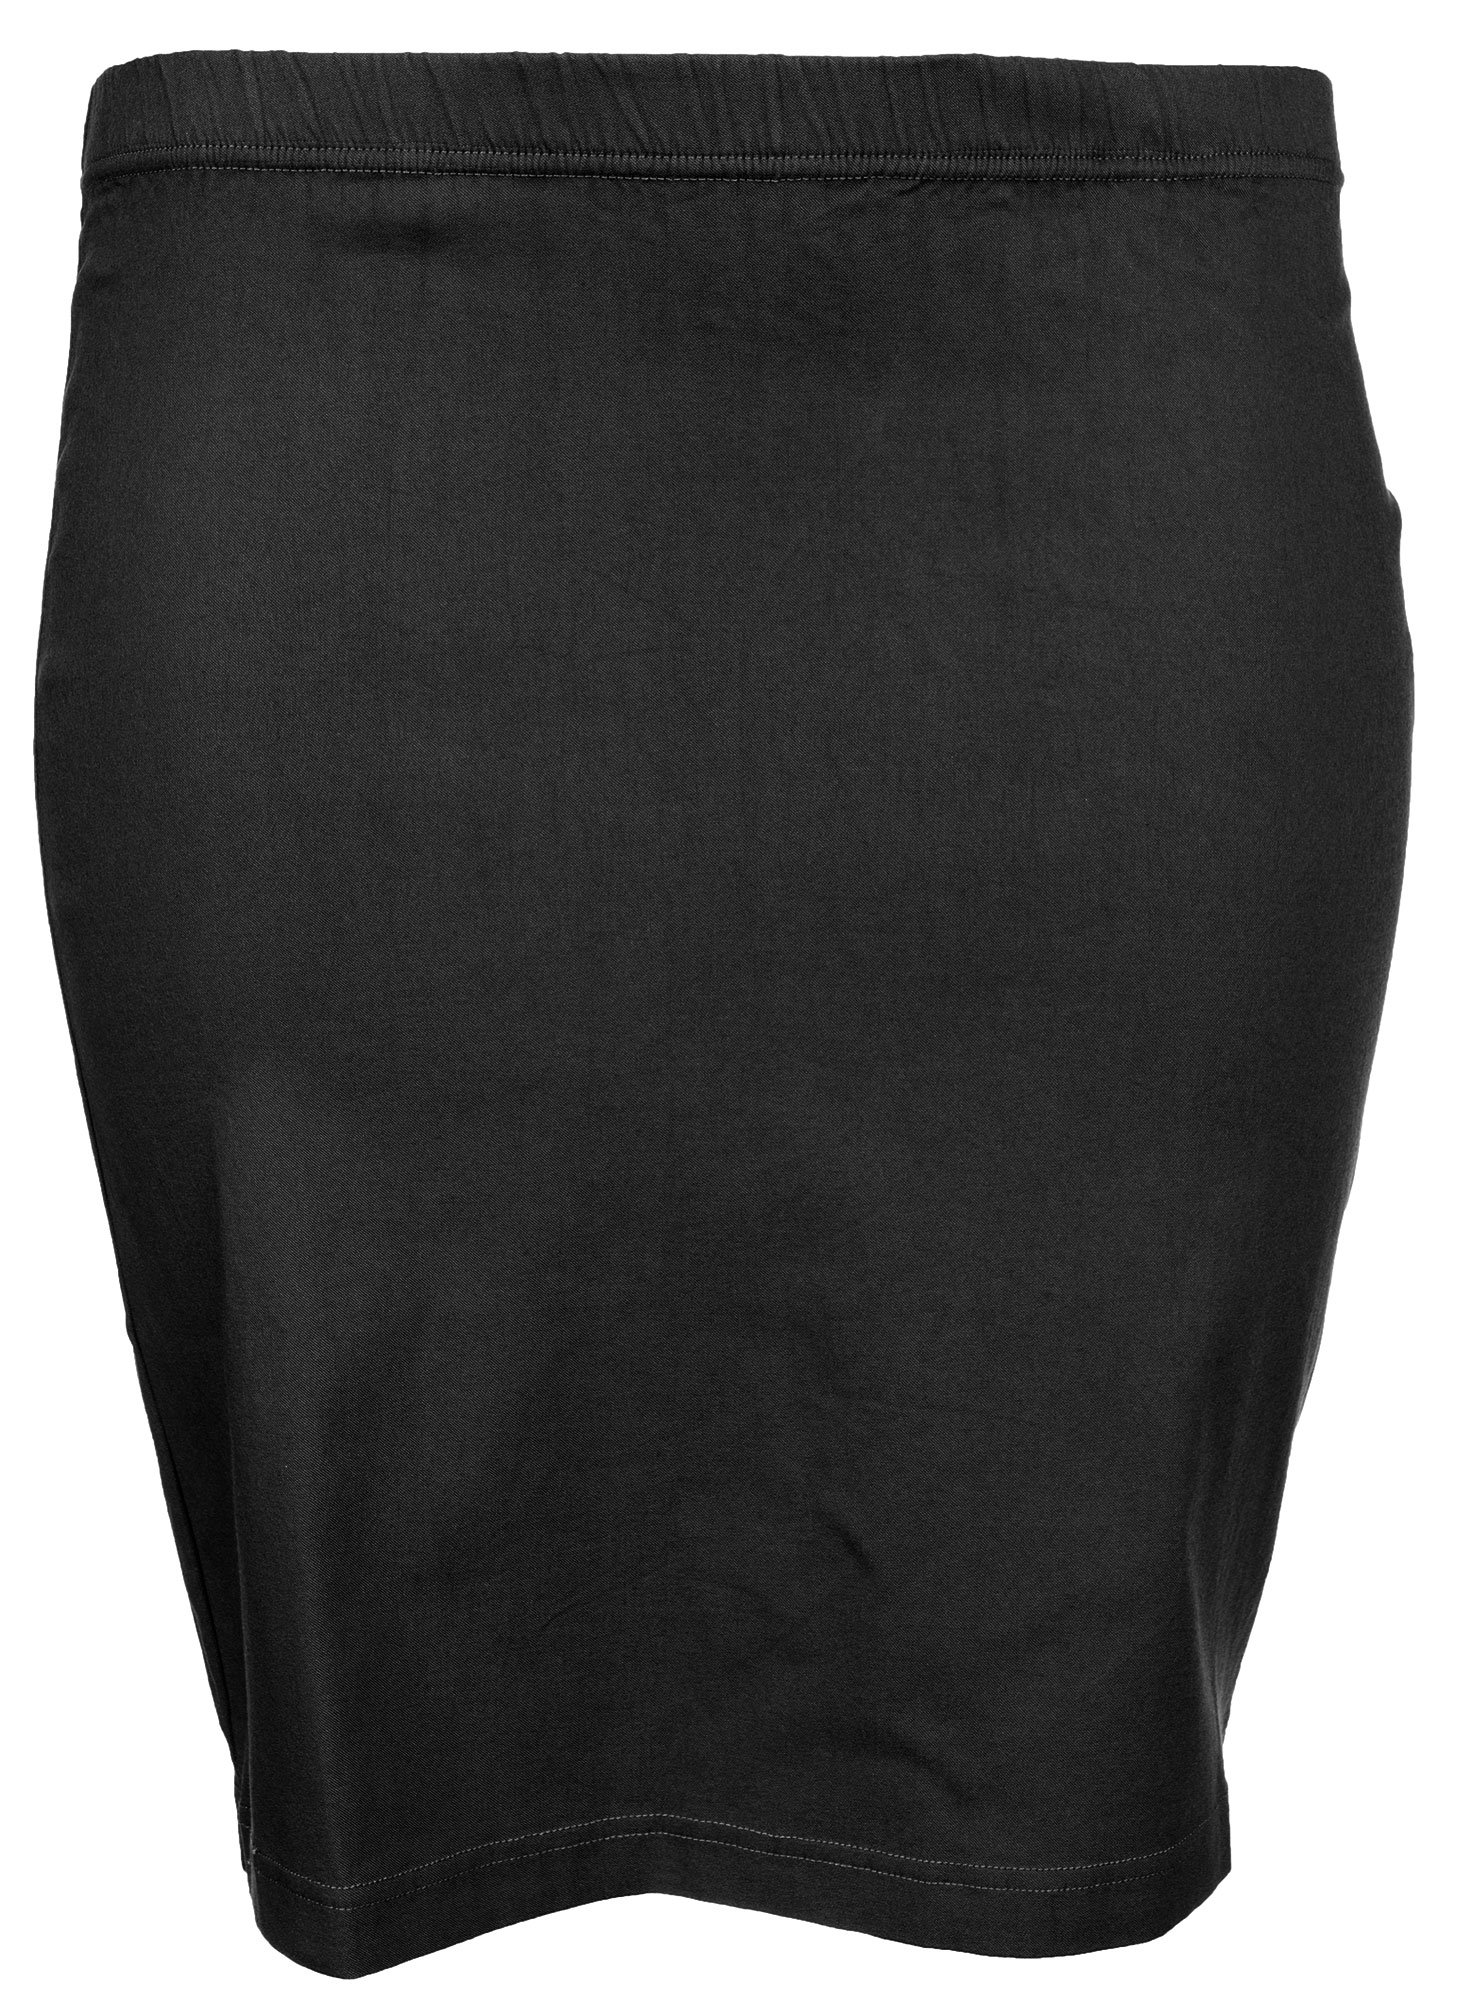 CLARE - Sort nederdel med elastik i taljen fra Gozzip